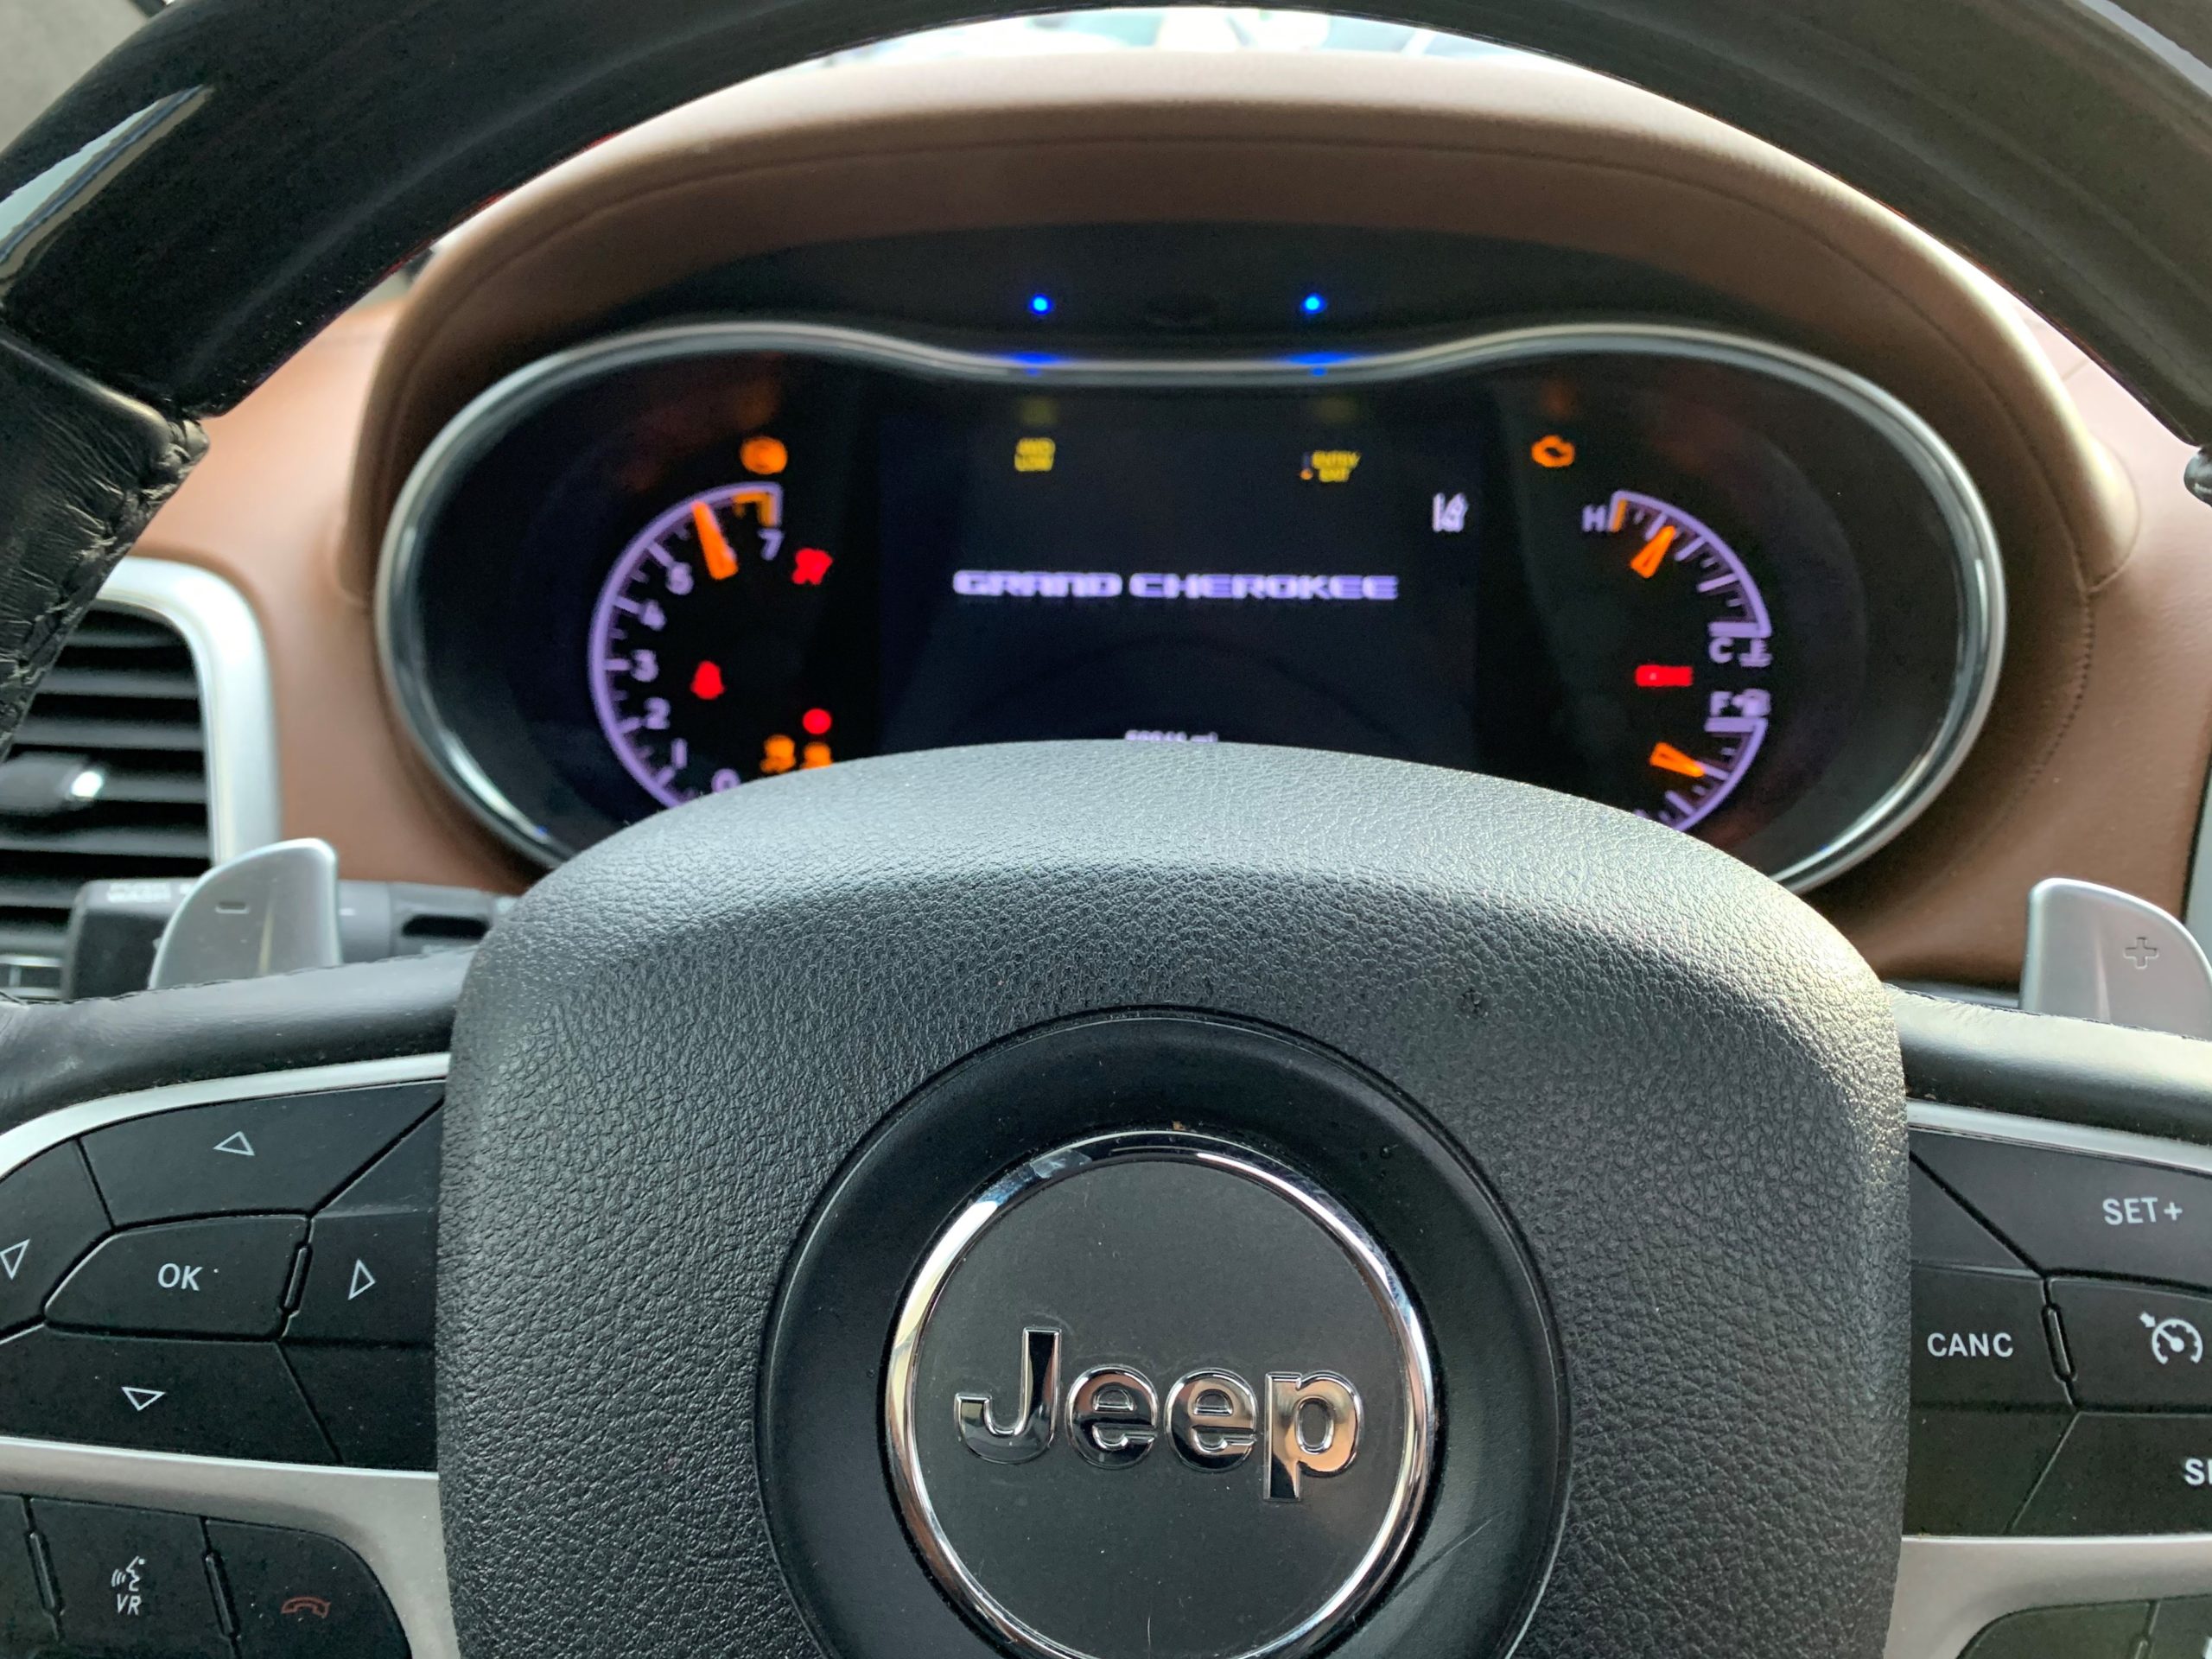 K40 Radar detector alert led's in a 2018 Jeep Grand Cherokee